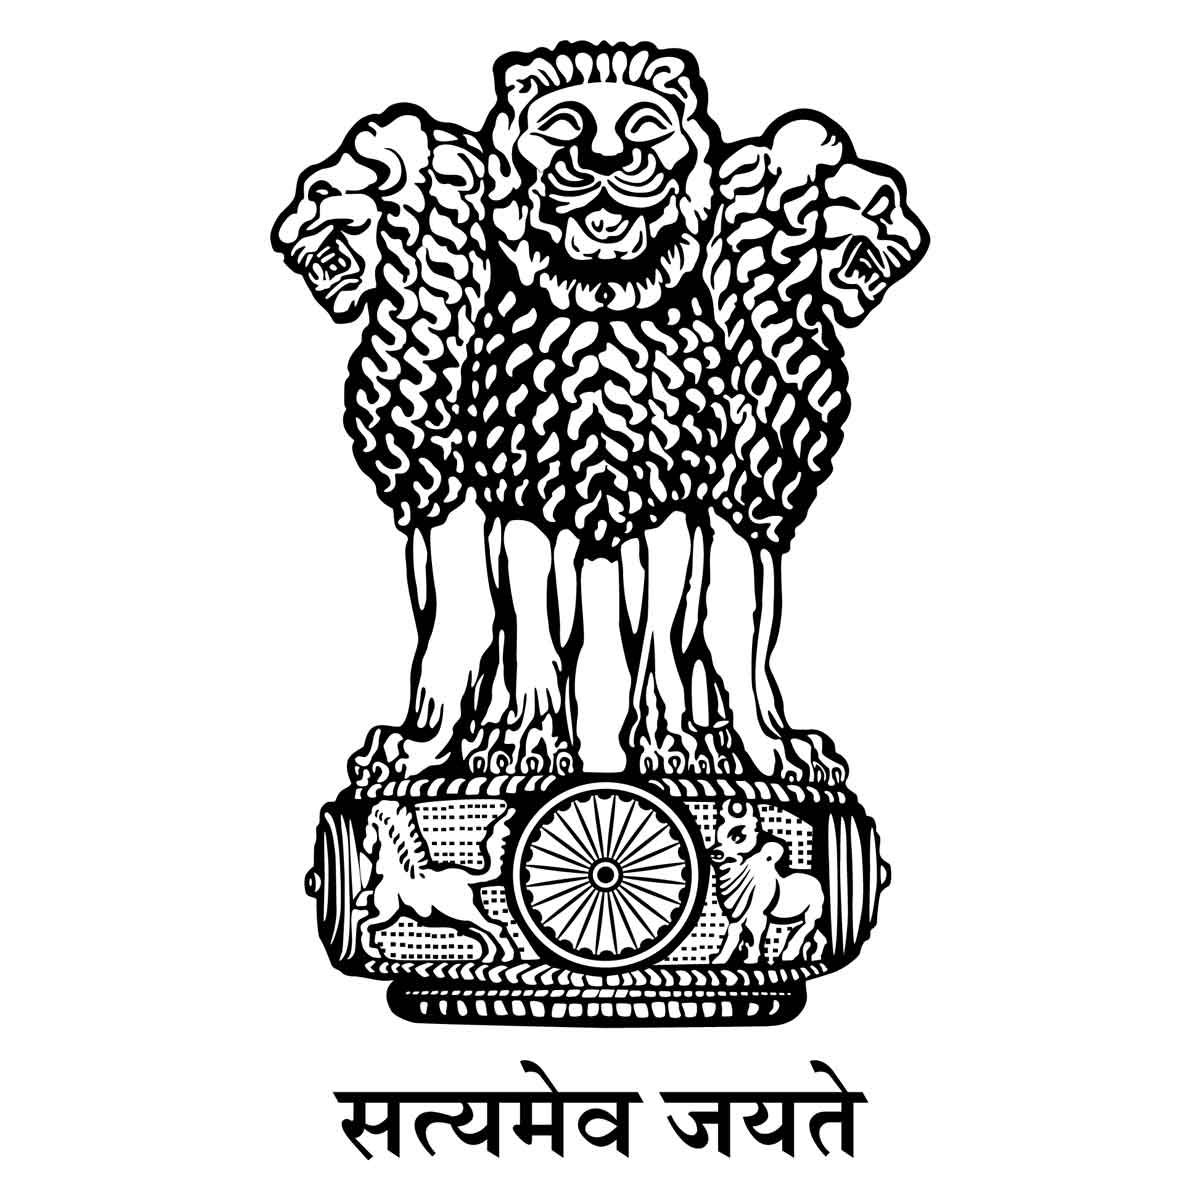 Upsc Indian Military Academy Recruitment - Union Public Service Commission Job Vacancies